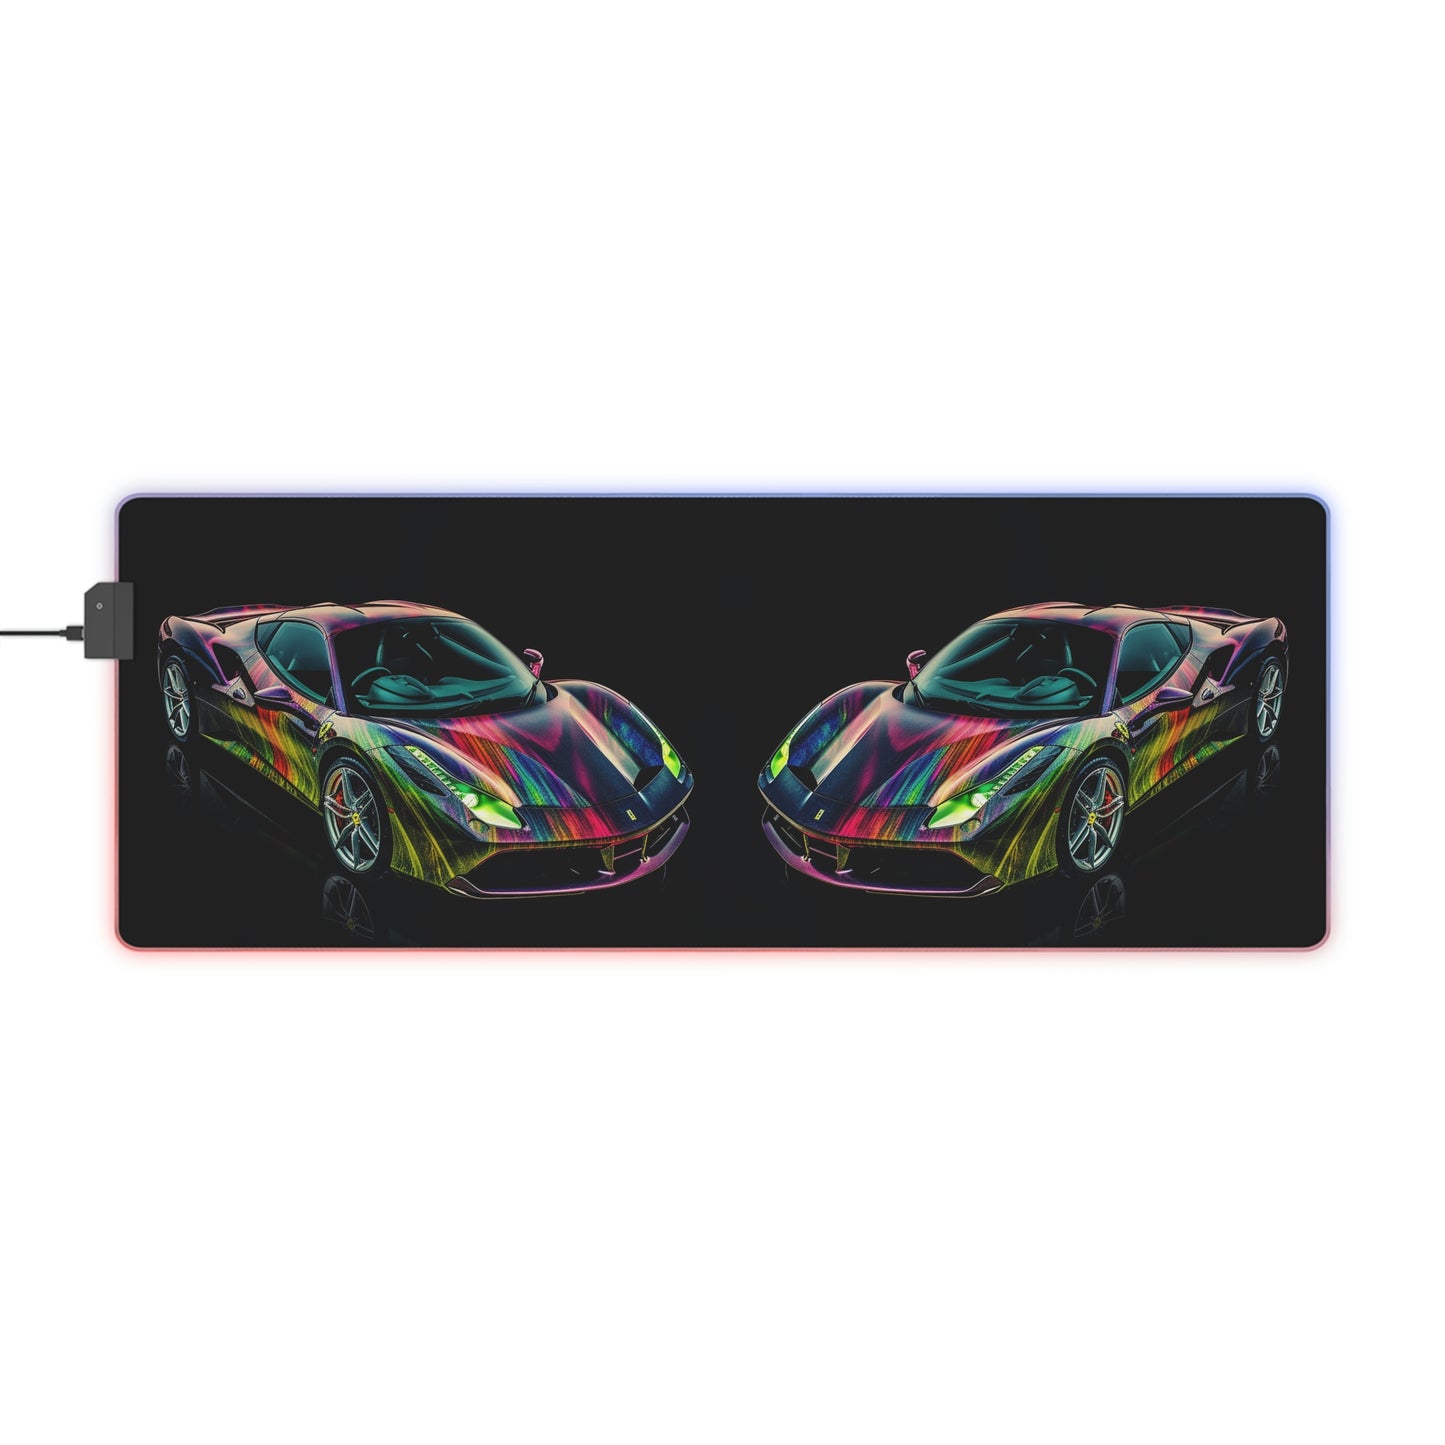 LED Gaming Mouse Pad Ferrari Color 3